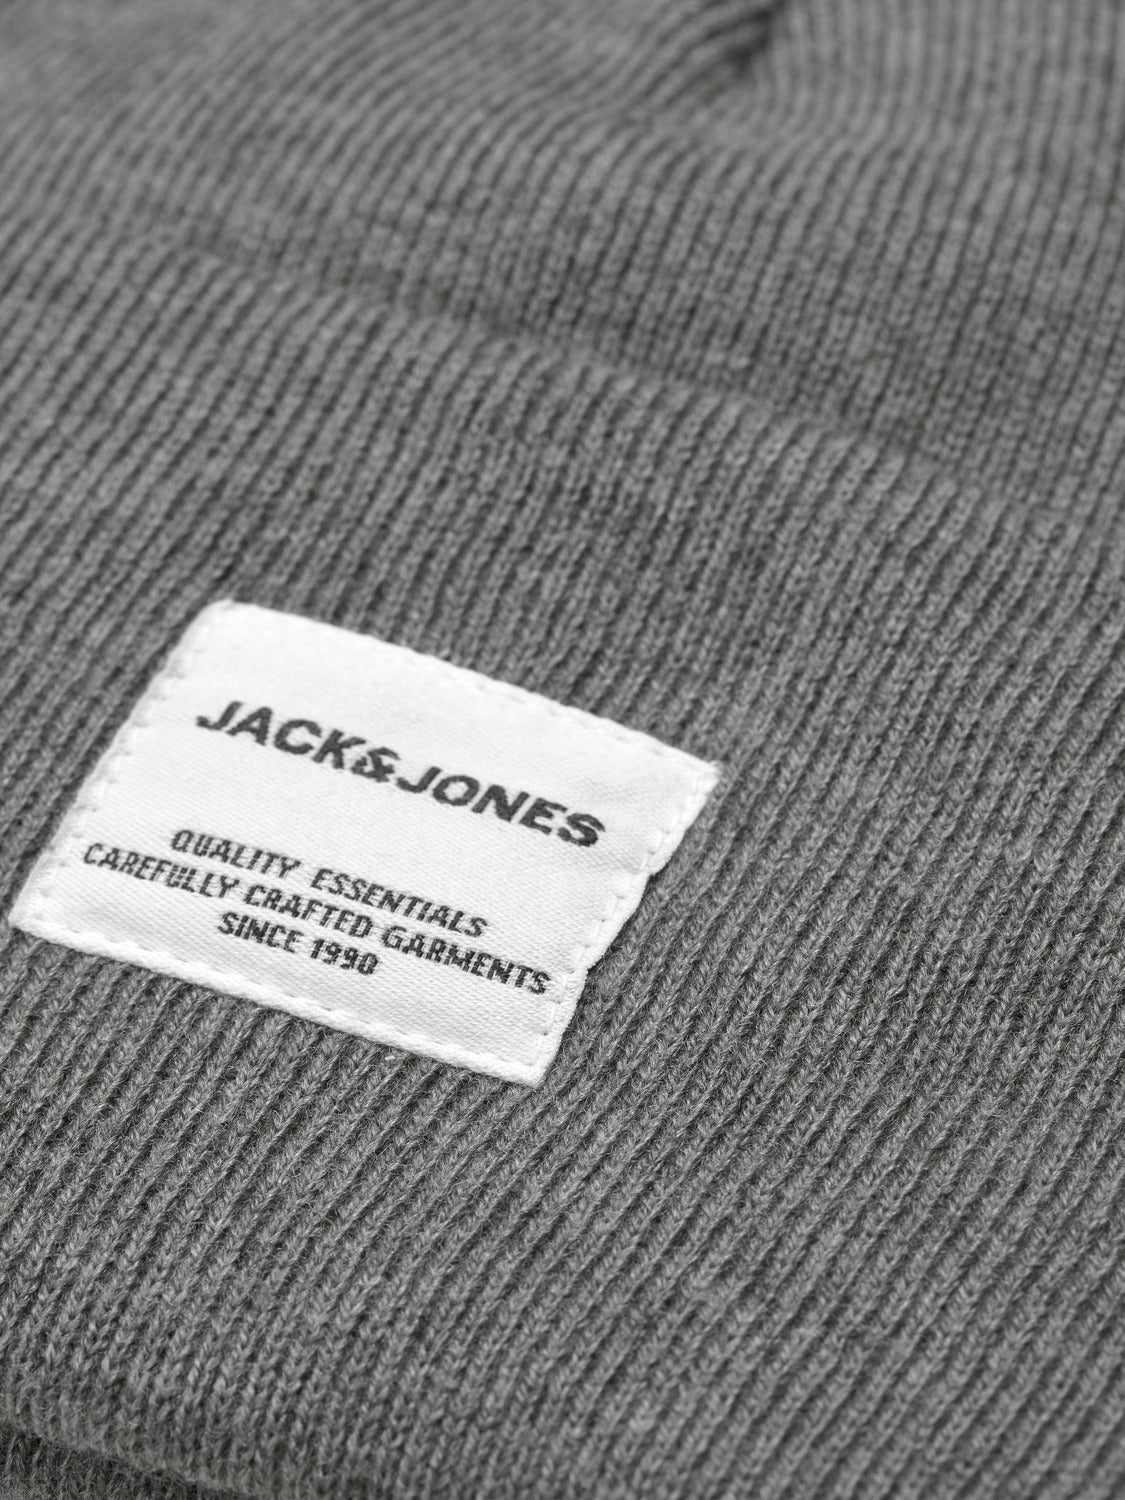 JACLONG Accessories - Grey Melange